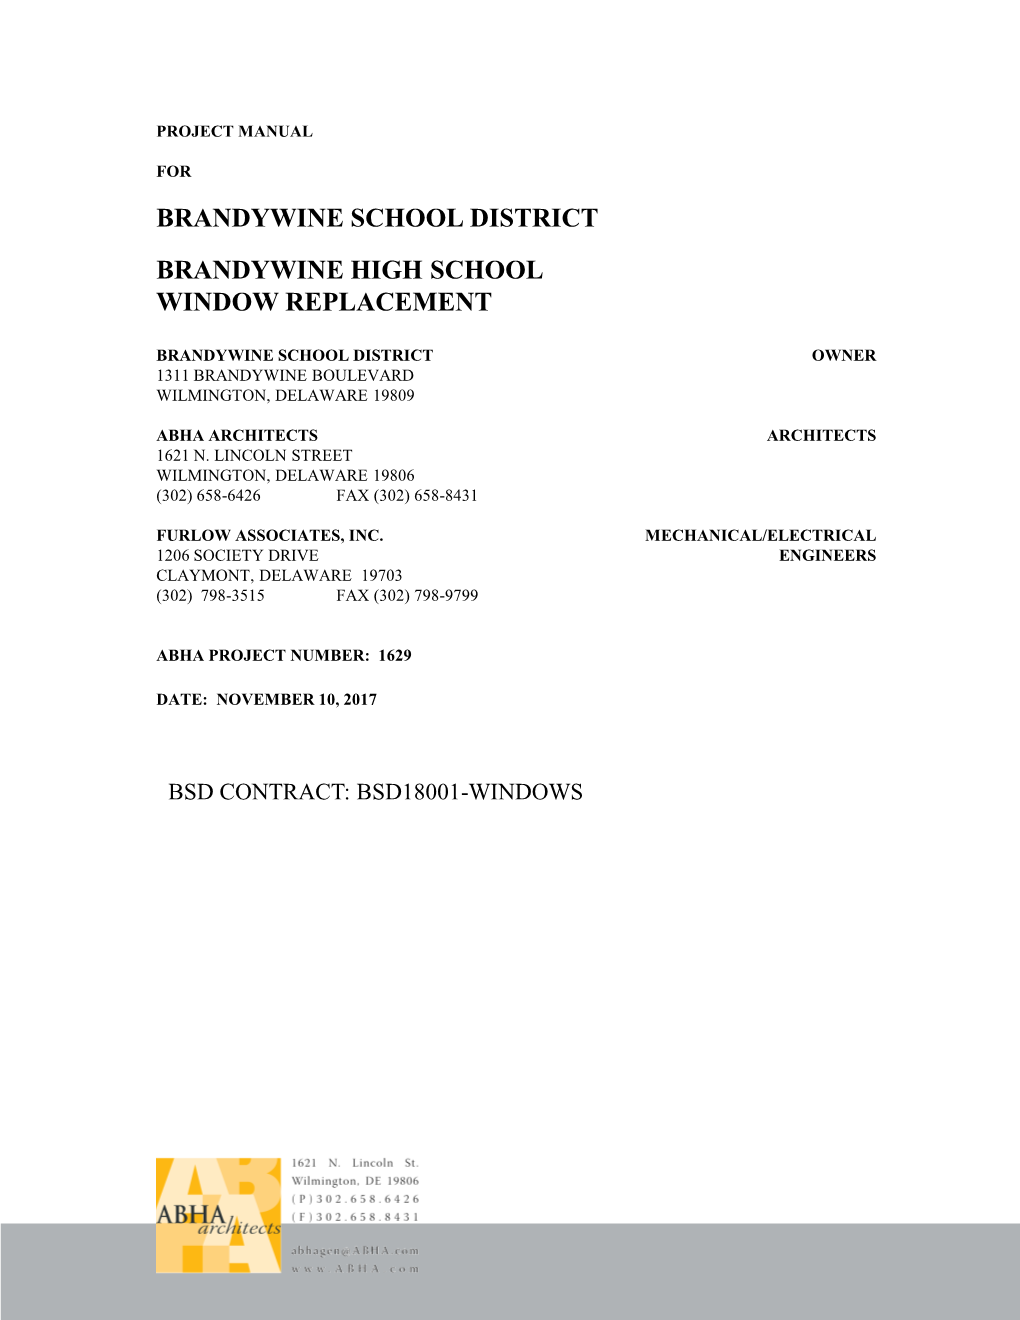 Brandywine School District Brandywine High School